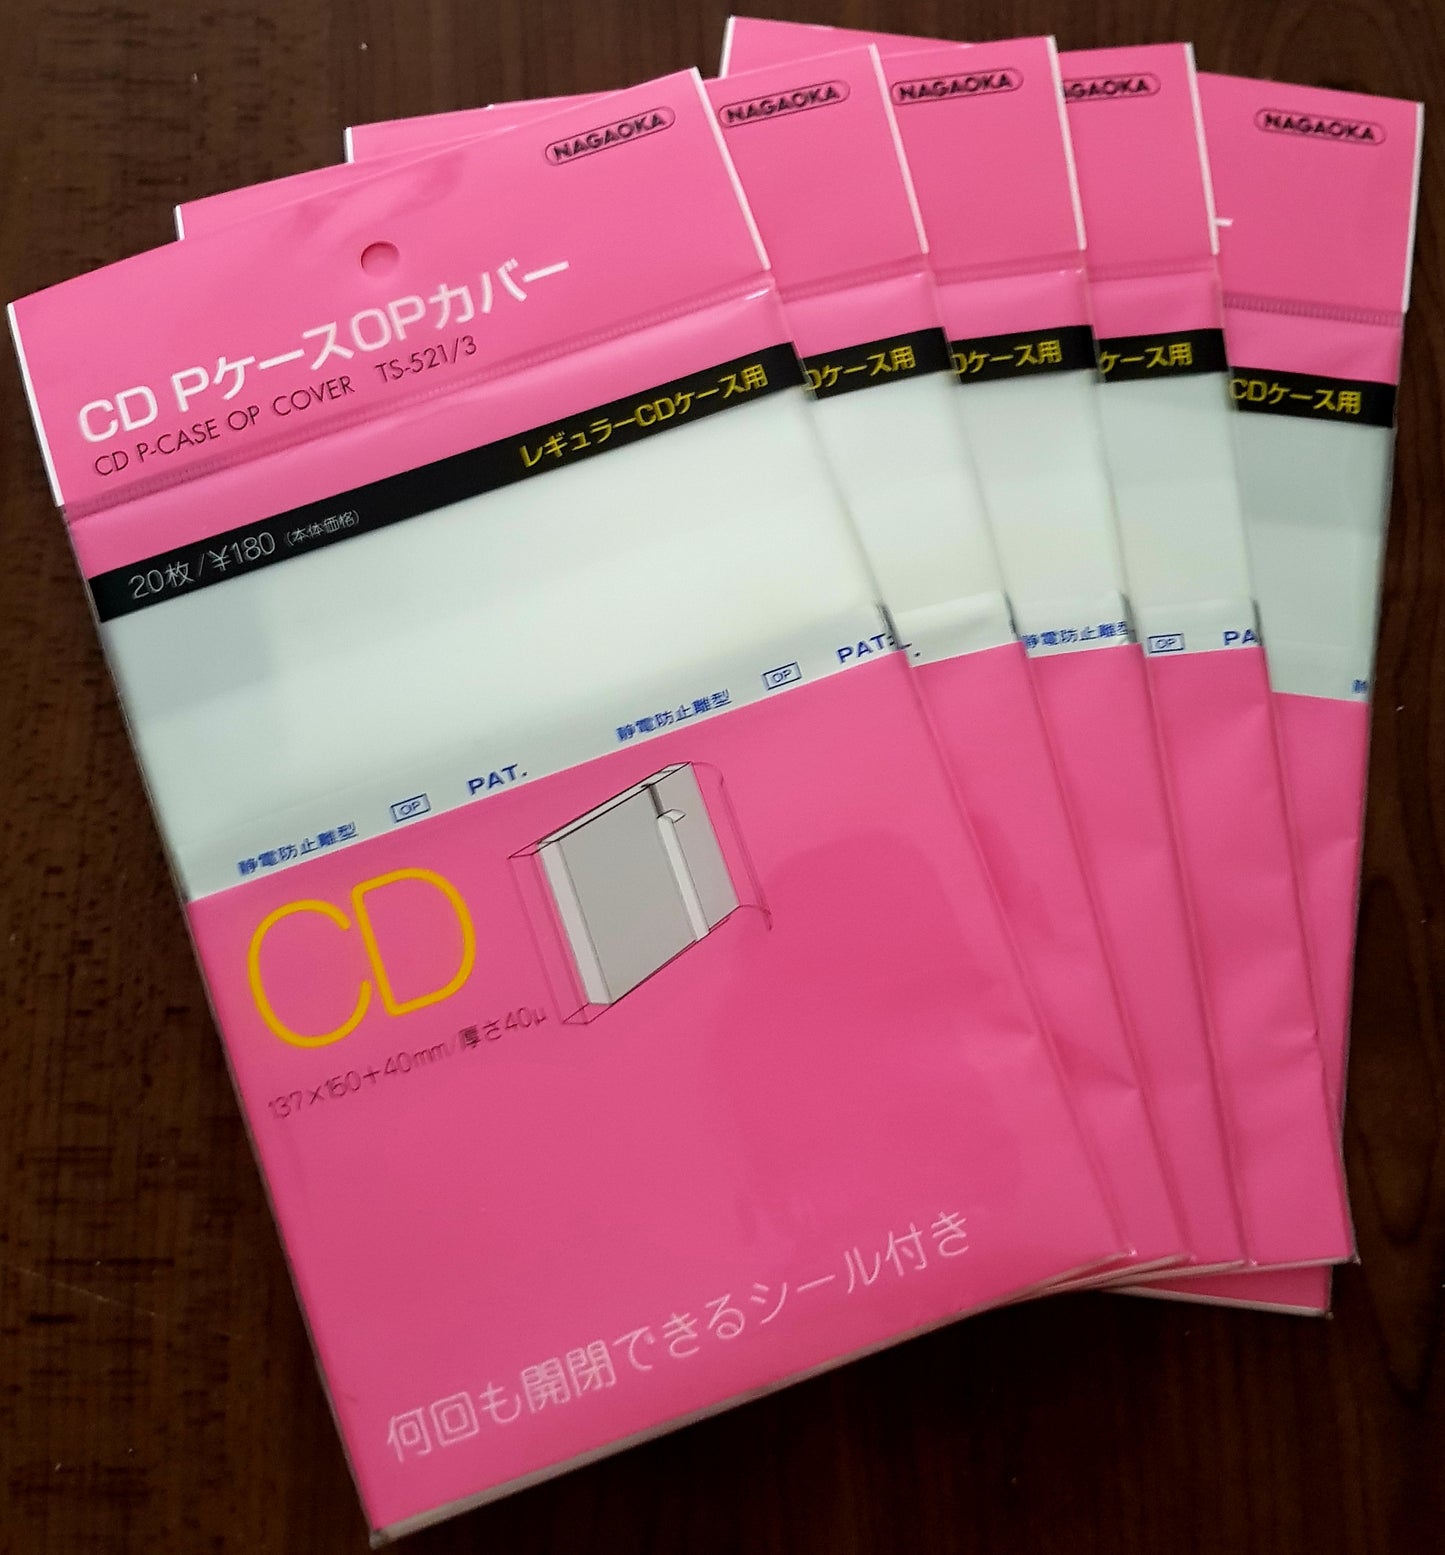 20 Nagaoka TS-521/3 Horizontal Jewel CD-Hüllen